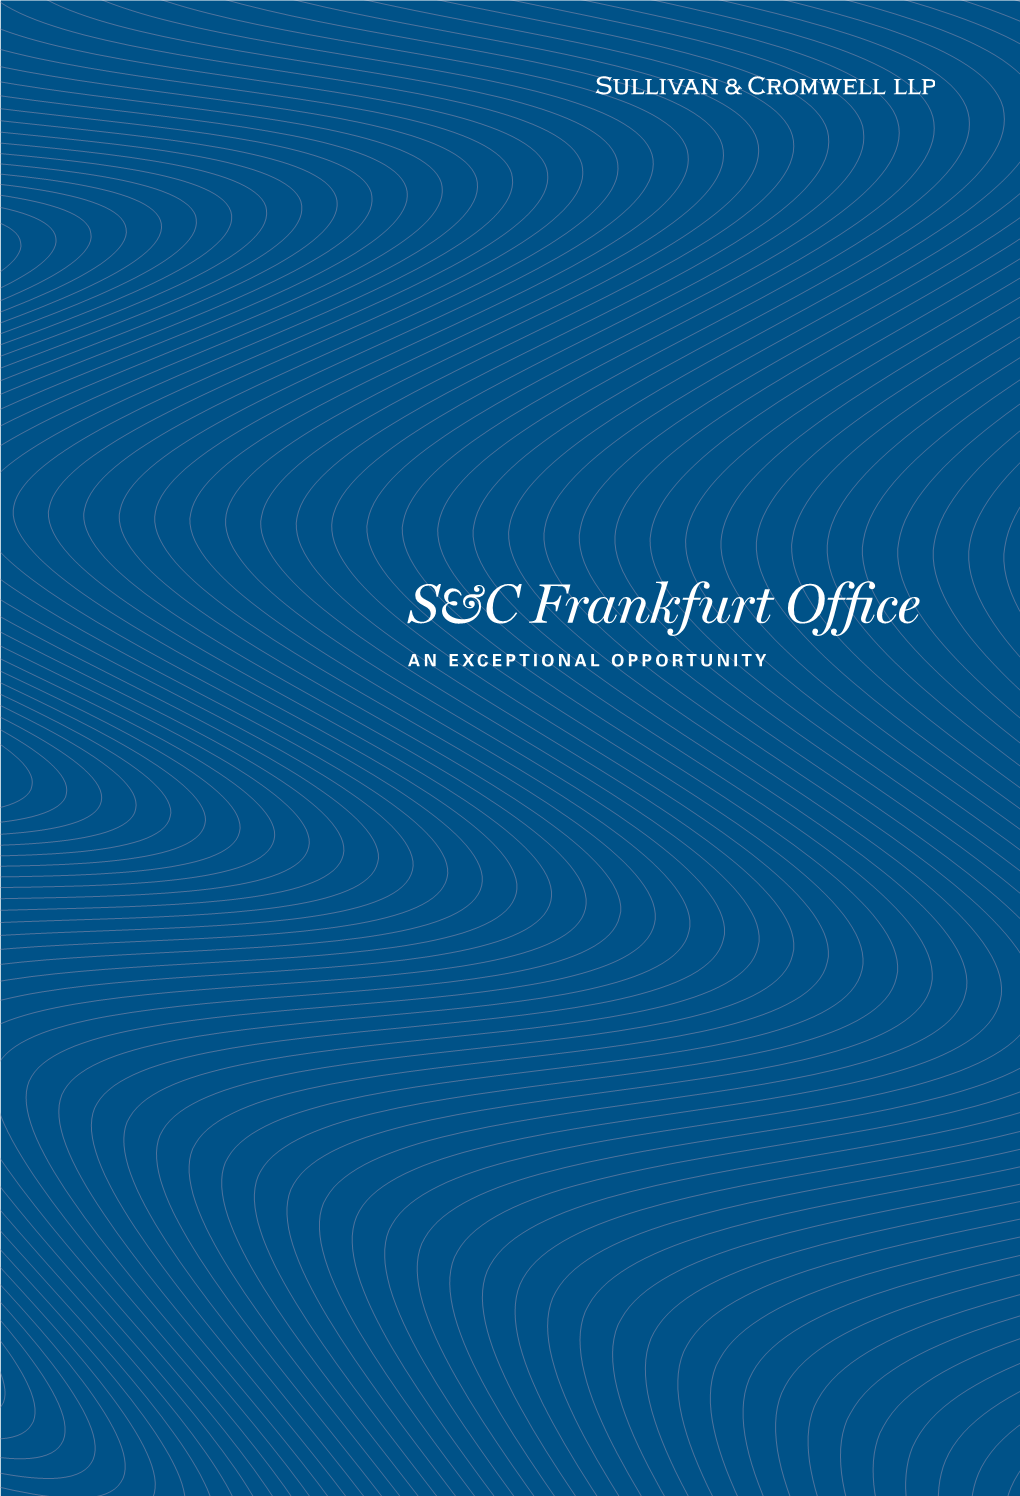 S&C Frankfurt Office